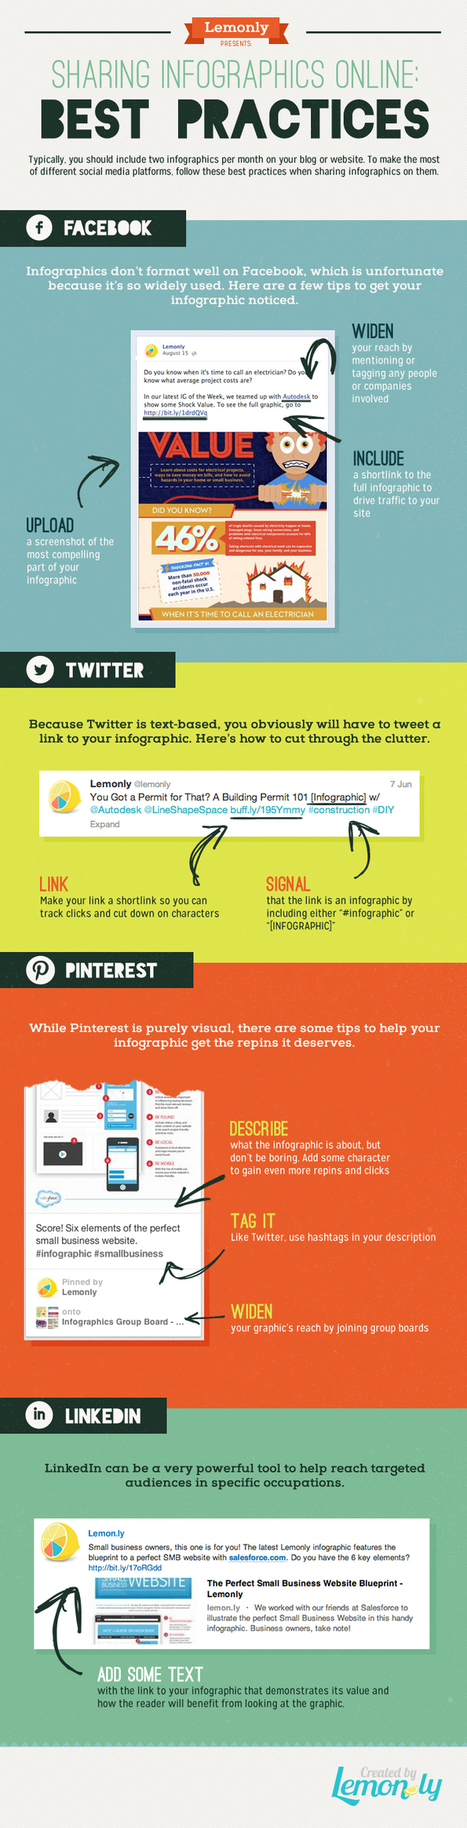 Social Media Best Practices for Infographics | World's Best Infographics | Scoop.it